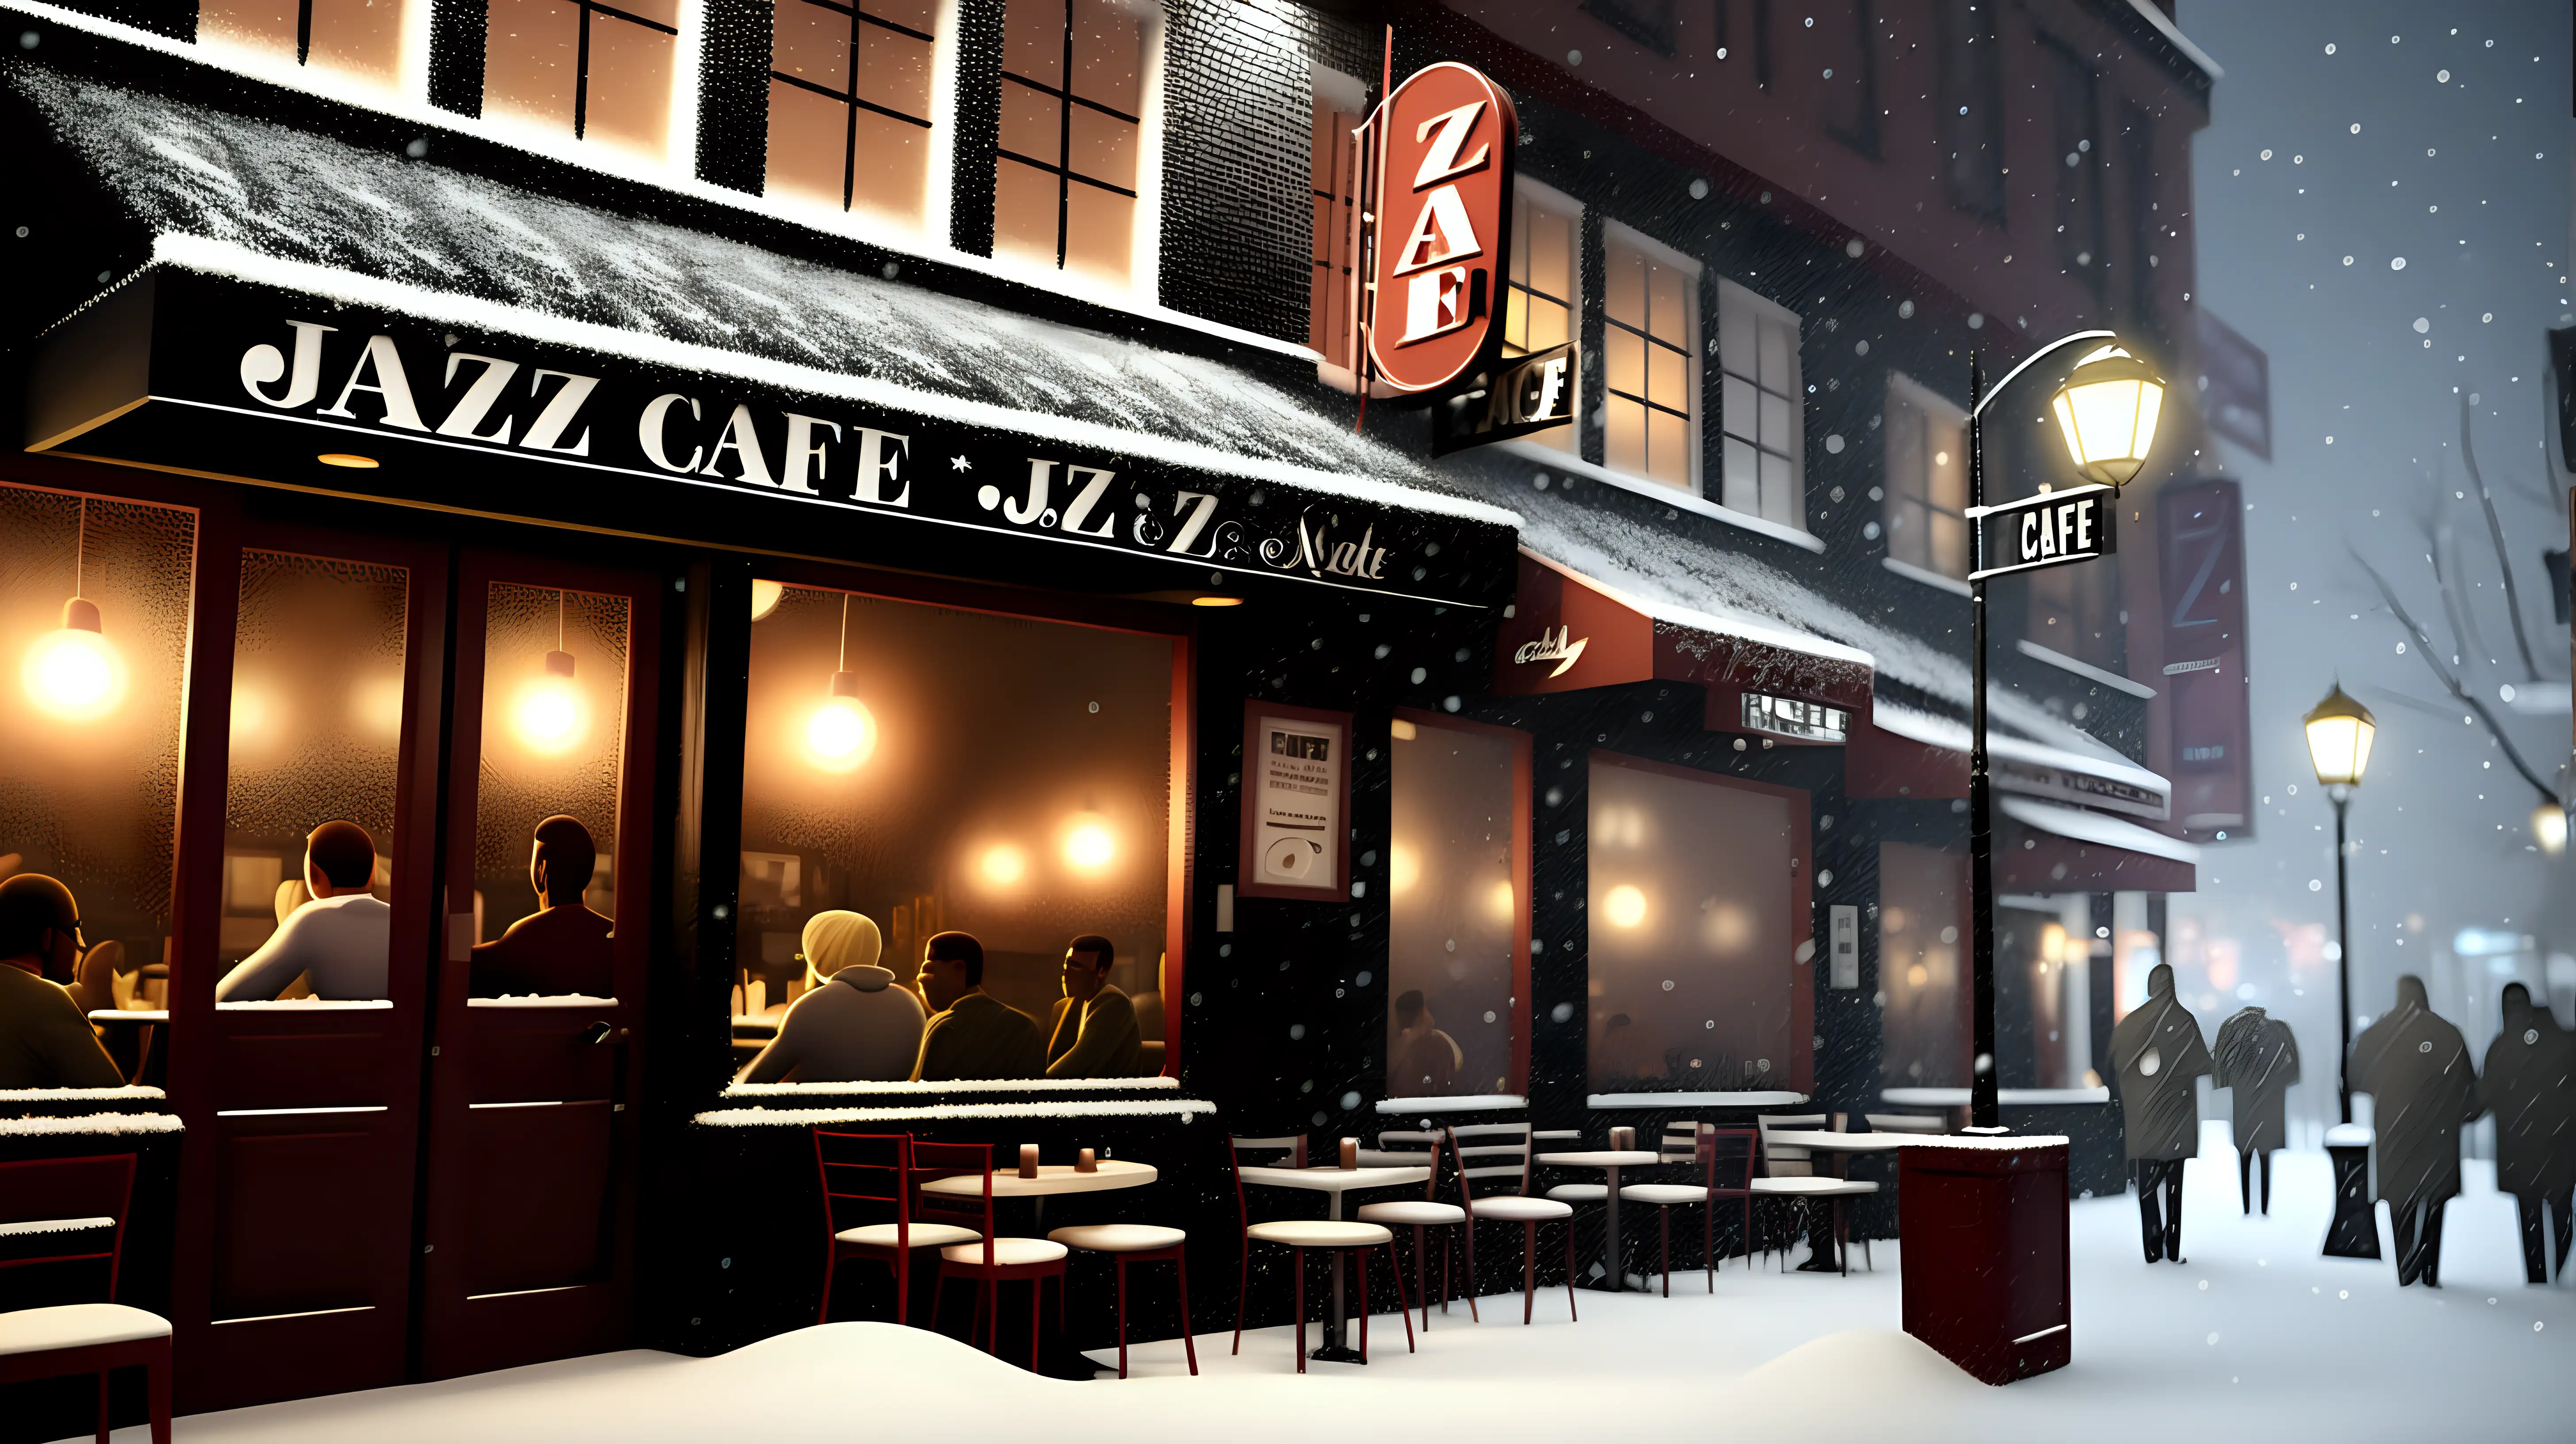 Cozy Jazz Cafe Night Scene with Snowfall